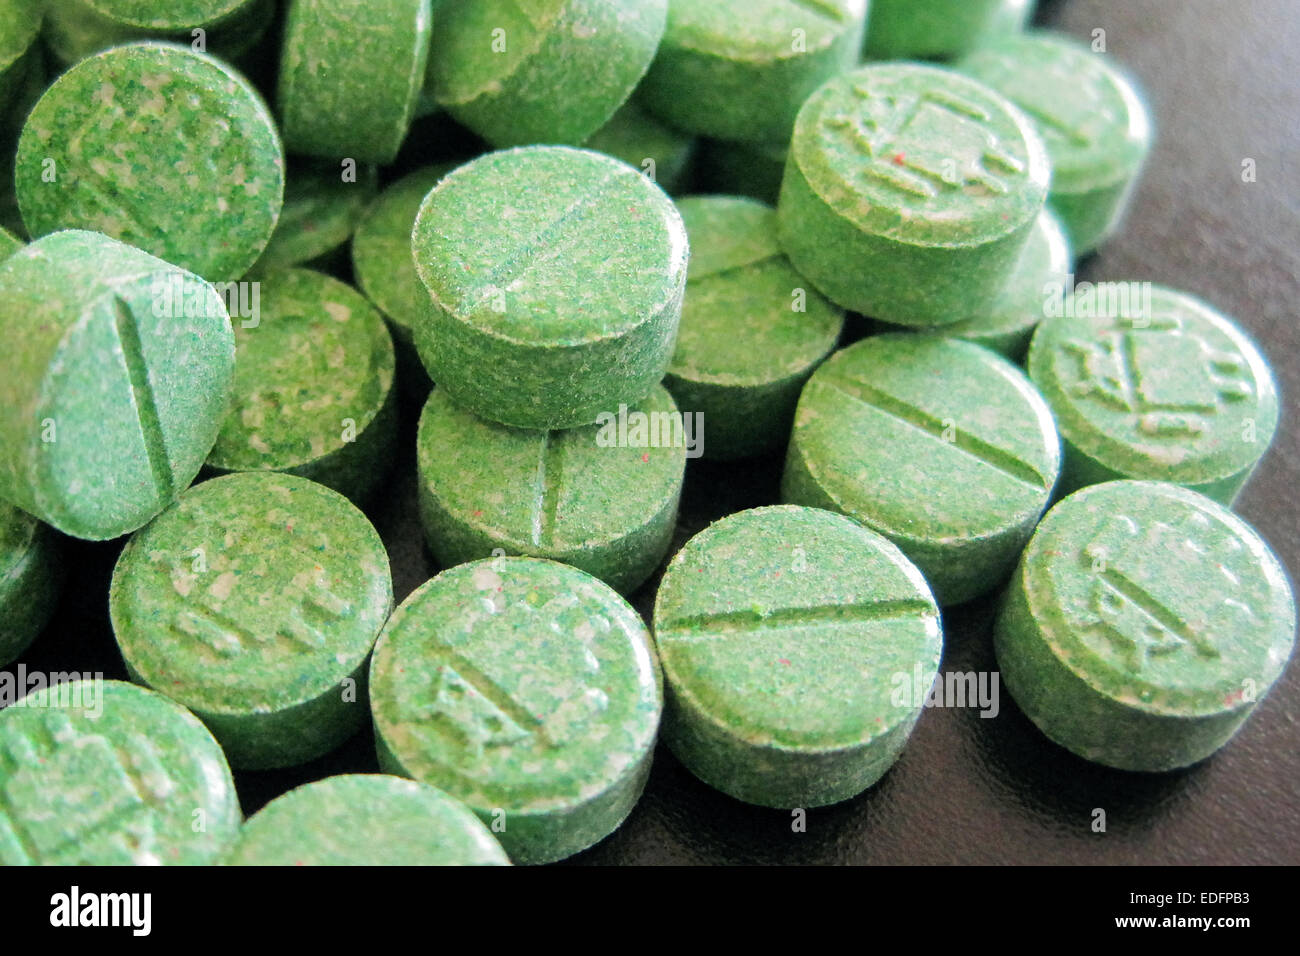 "Grüne Android" Ecstasy-Pillen, die zwischen 150-200mg MDMA (3,4-Methylendioxy-N-Methylamphetamin). Stockfoto